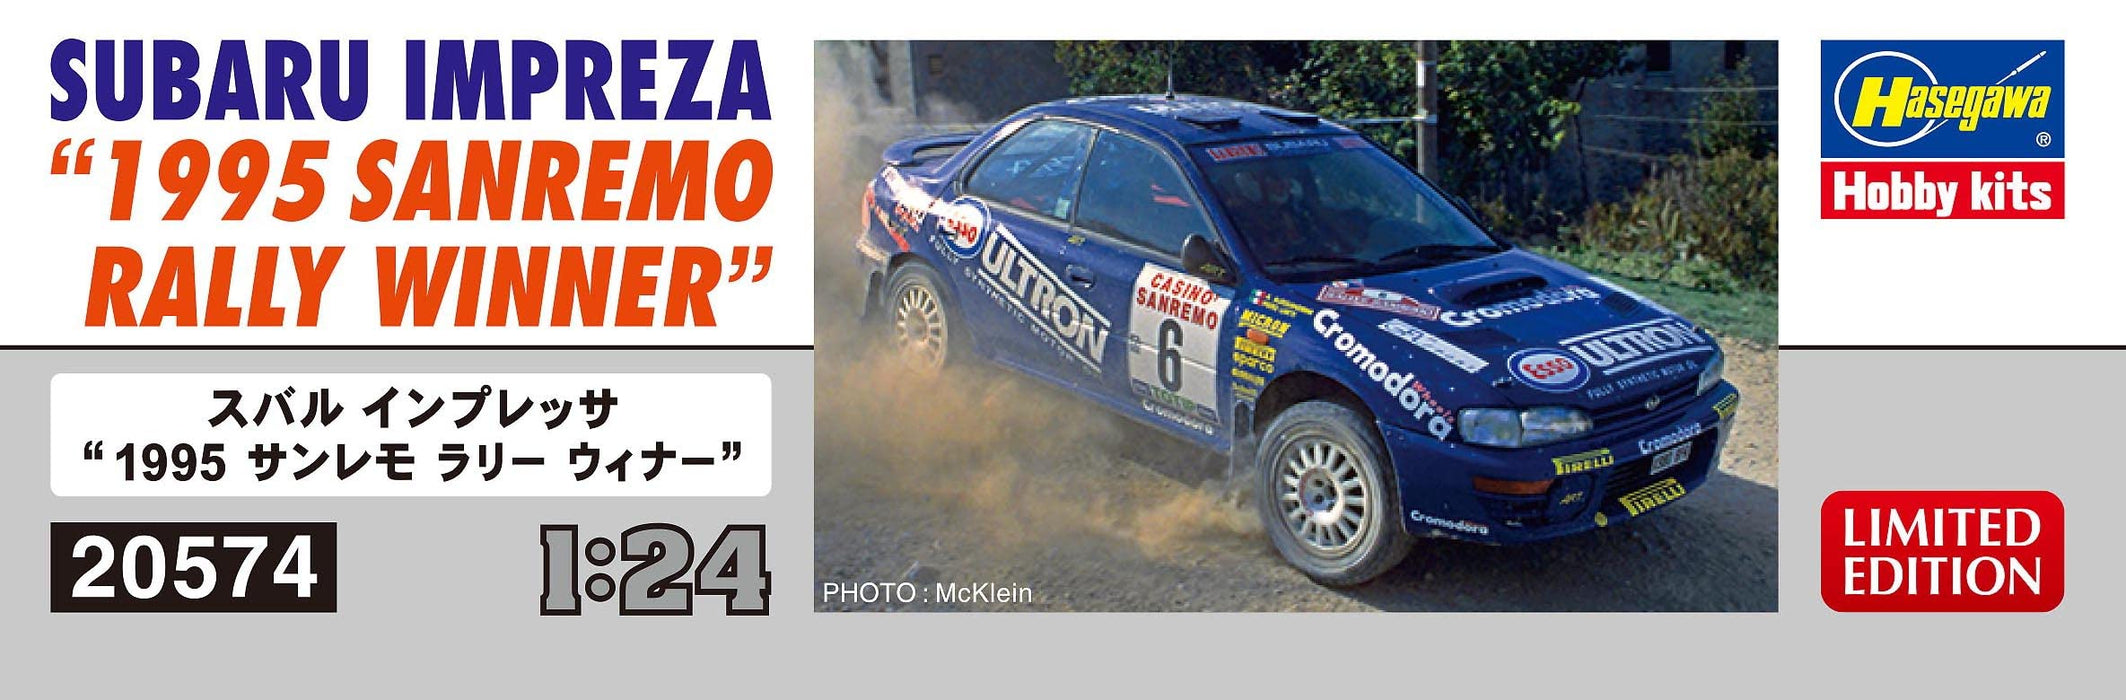 HASEGAWA 1/24 Subaru Impreza 1995 Sanremo Rally Winner Modèle en plastique